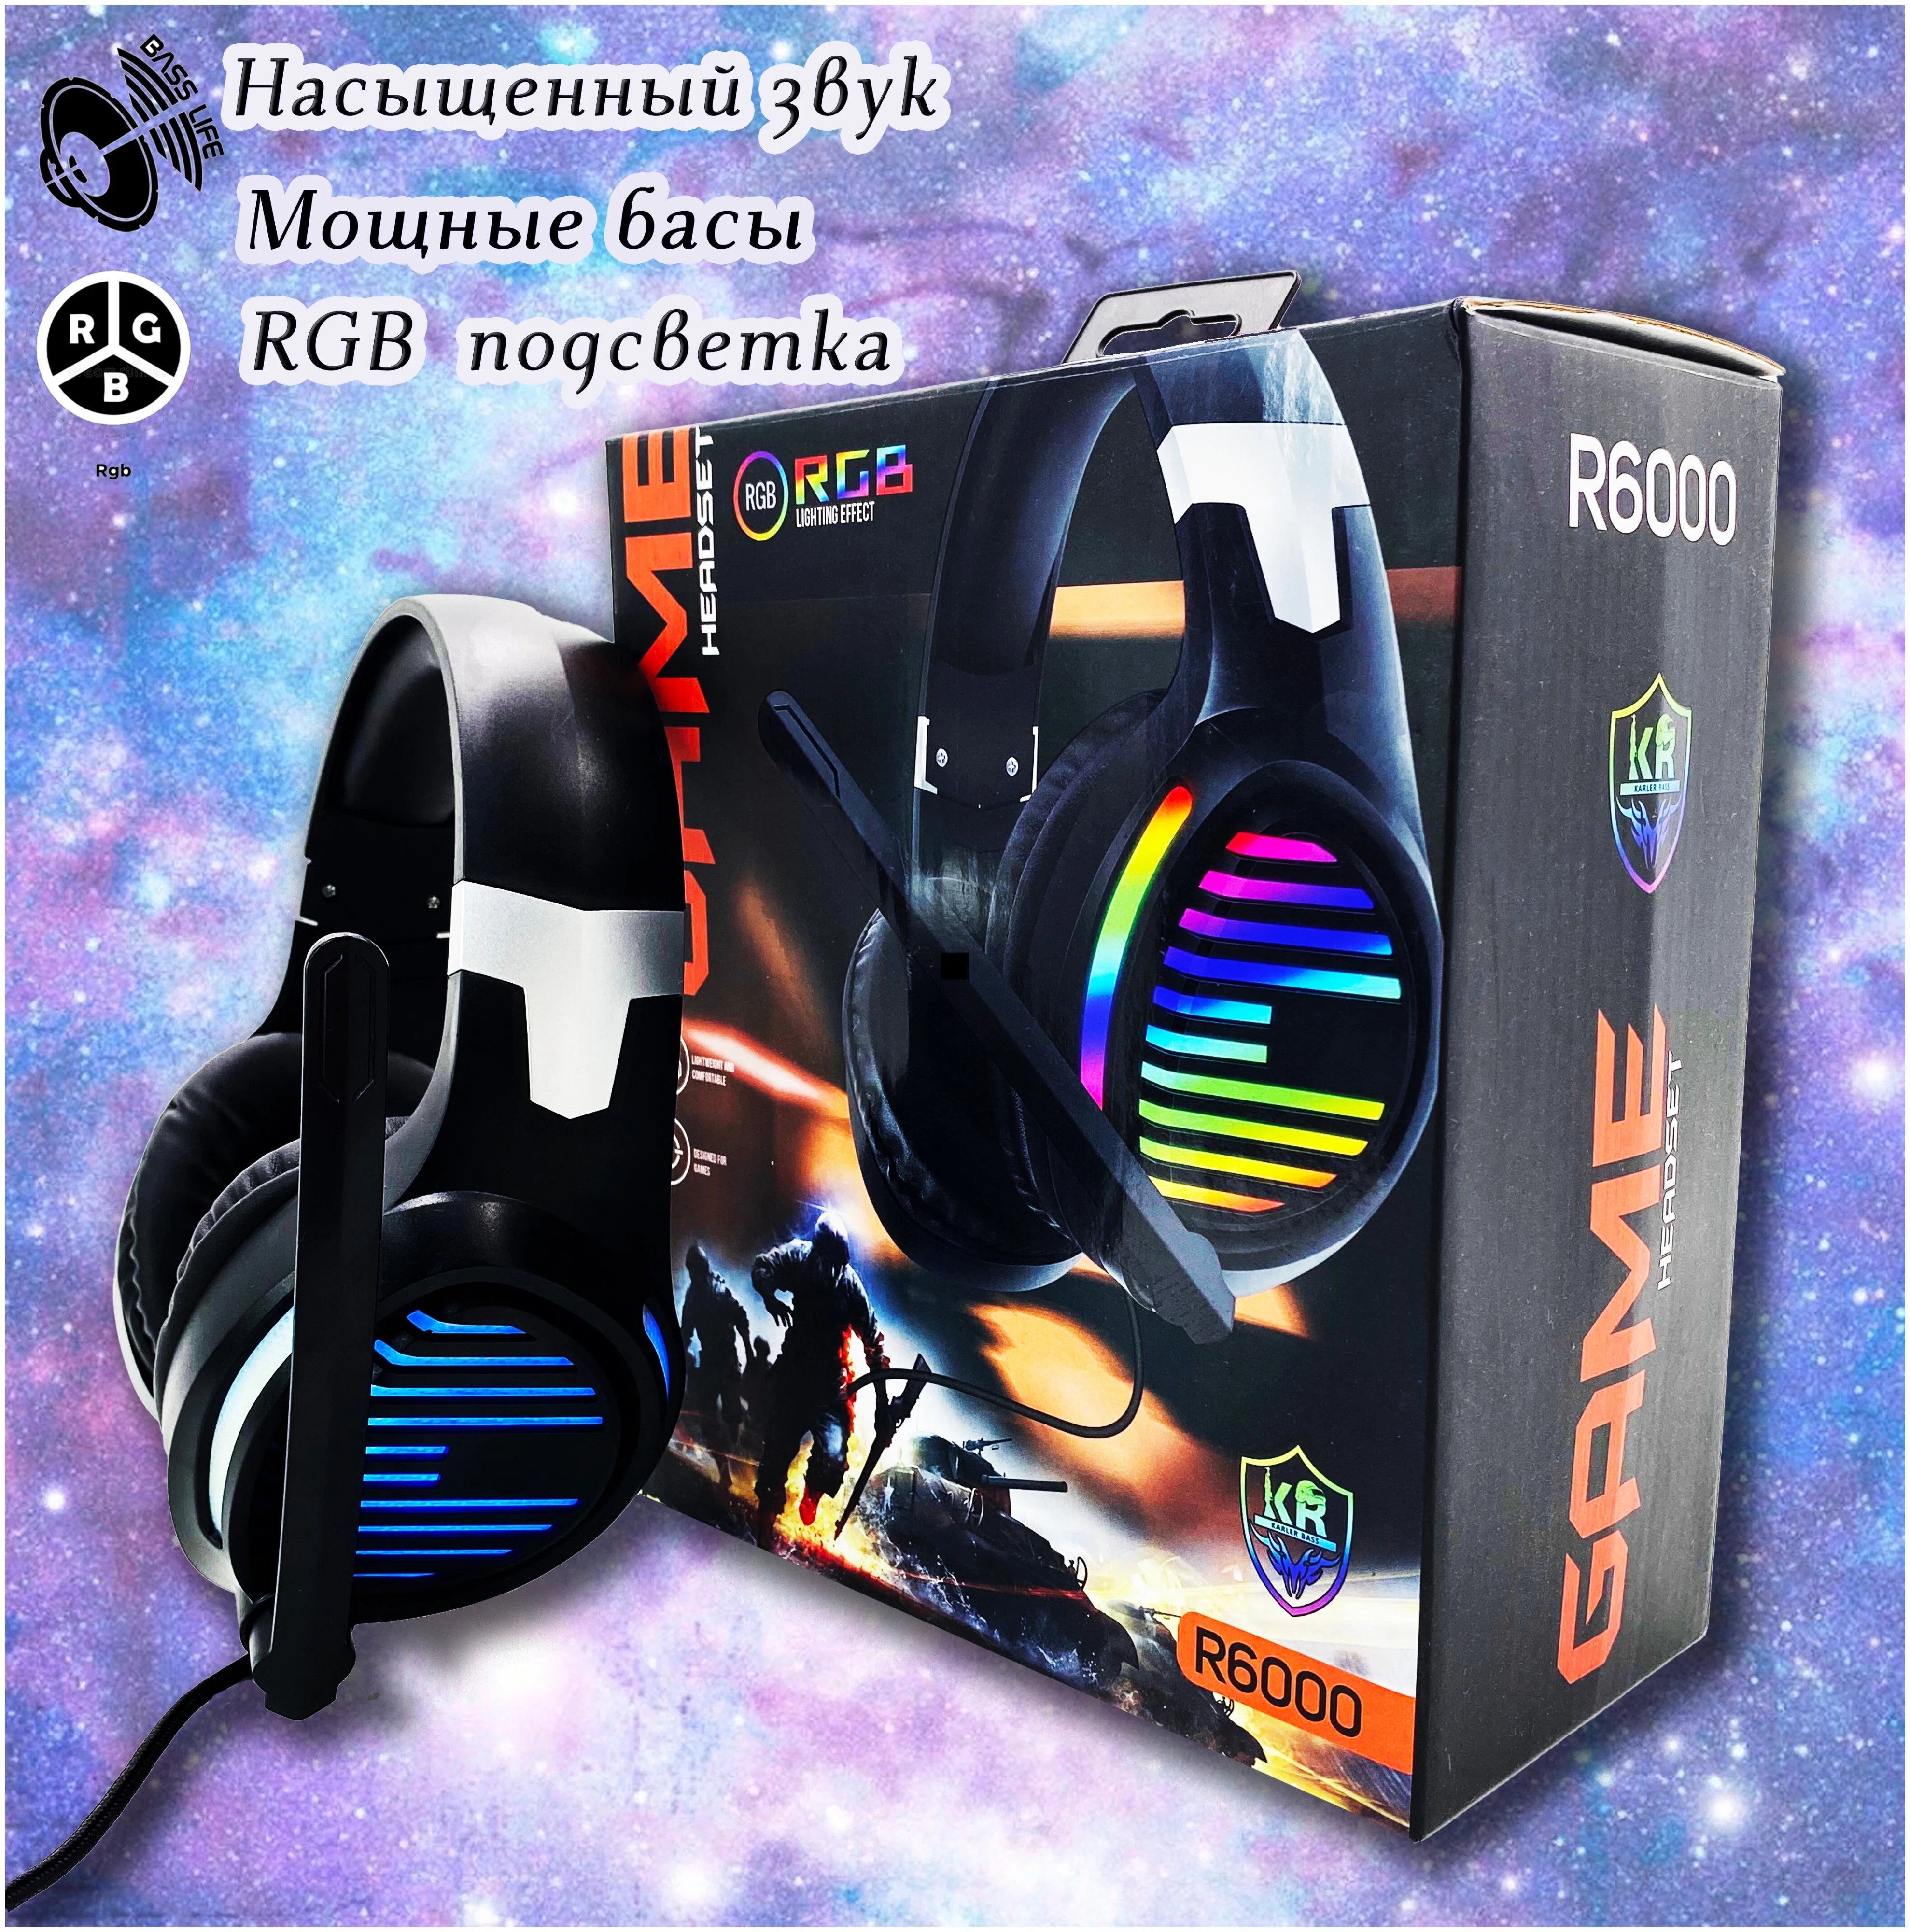 Karler Bass Gaming Headphone - R6000